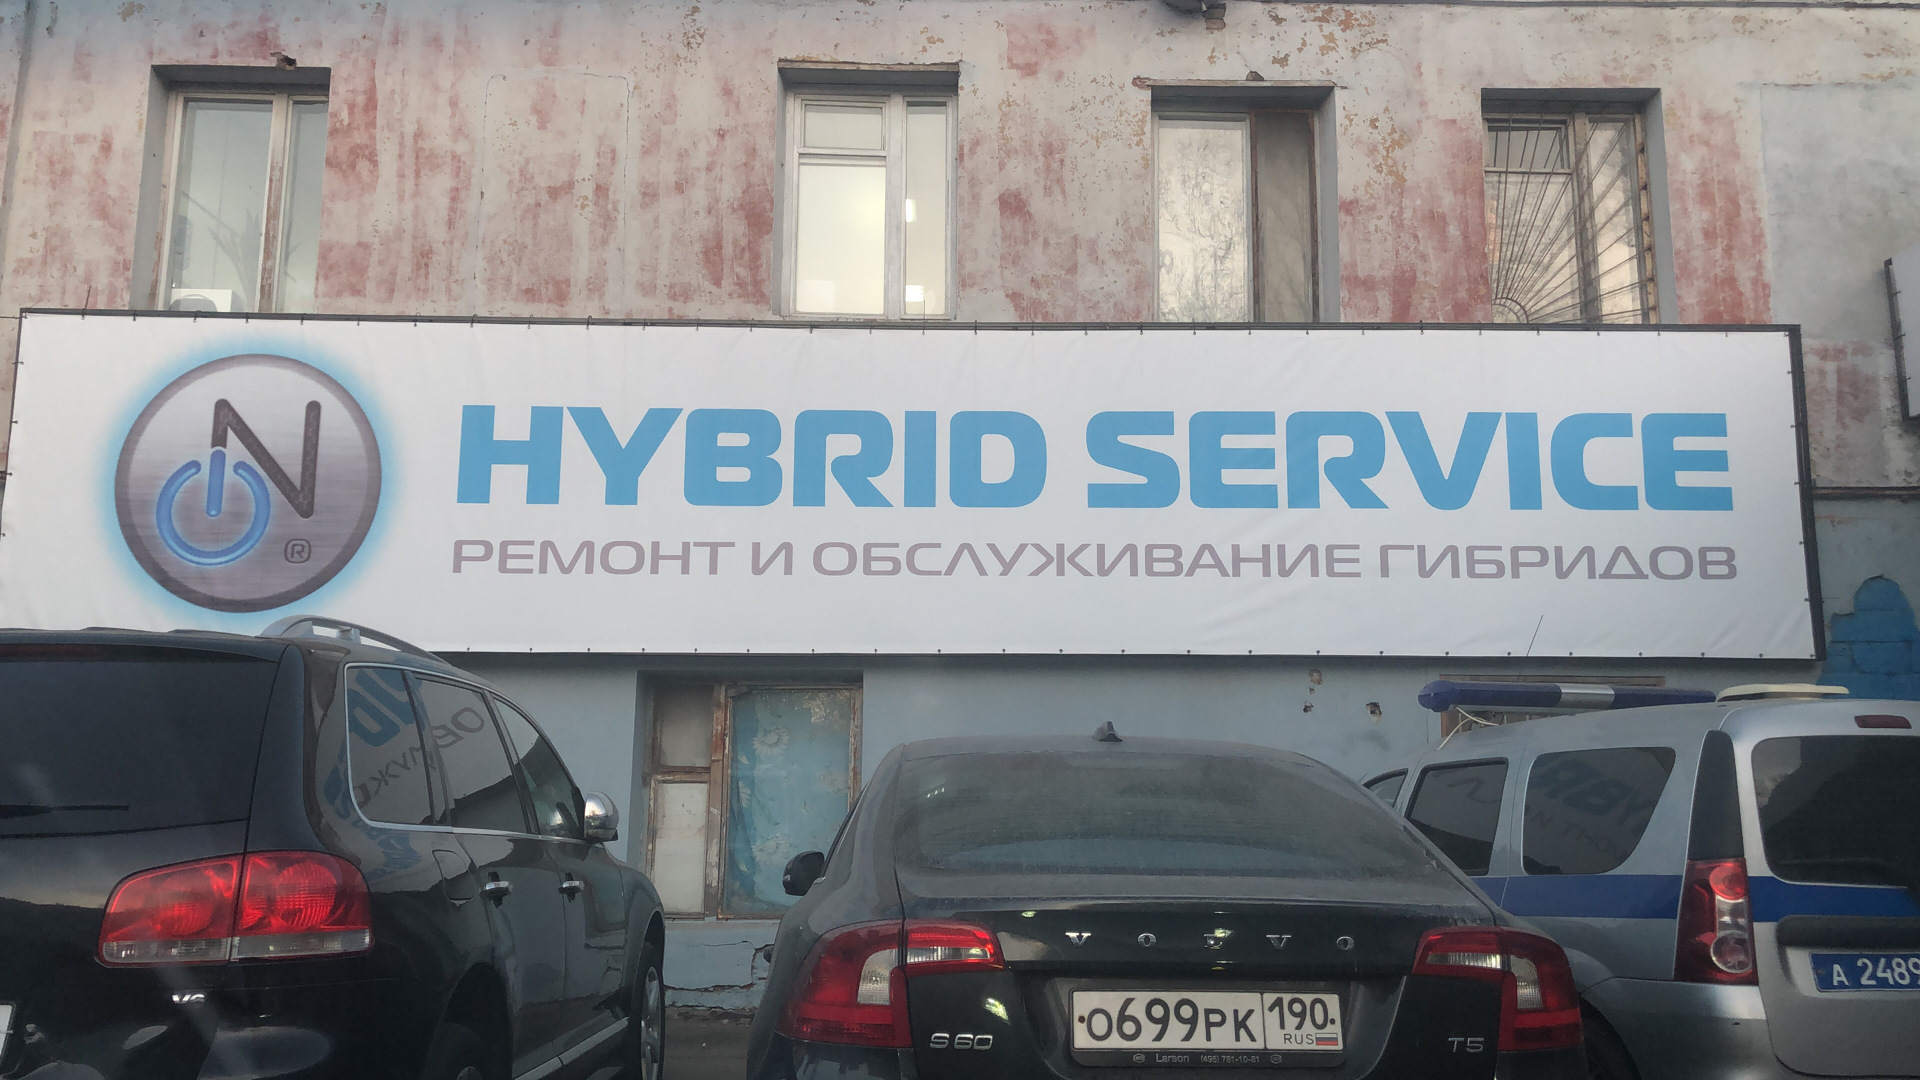 Hybrids москва. Гибрид сервис в Москве. Гибрид сервис на полярной. Гибрид сервис во Владивостоке. On Hybrid service Хабаровск.